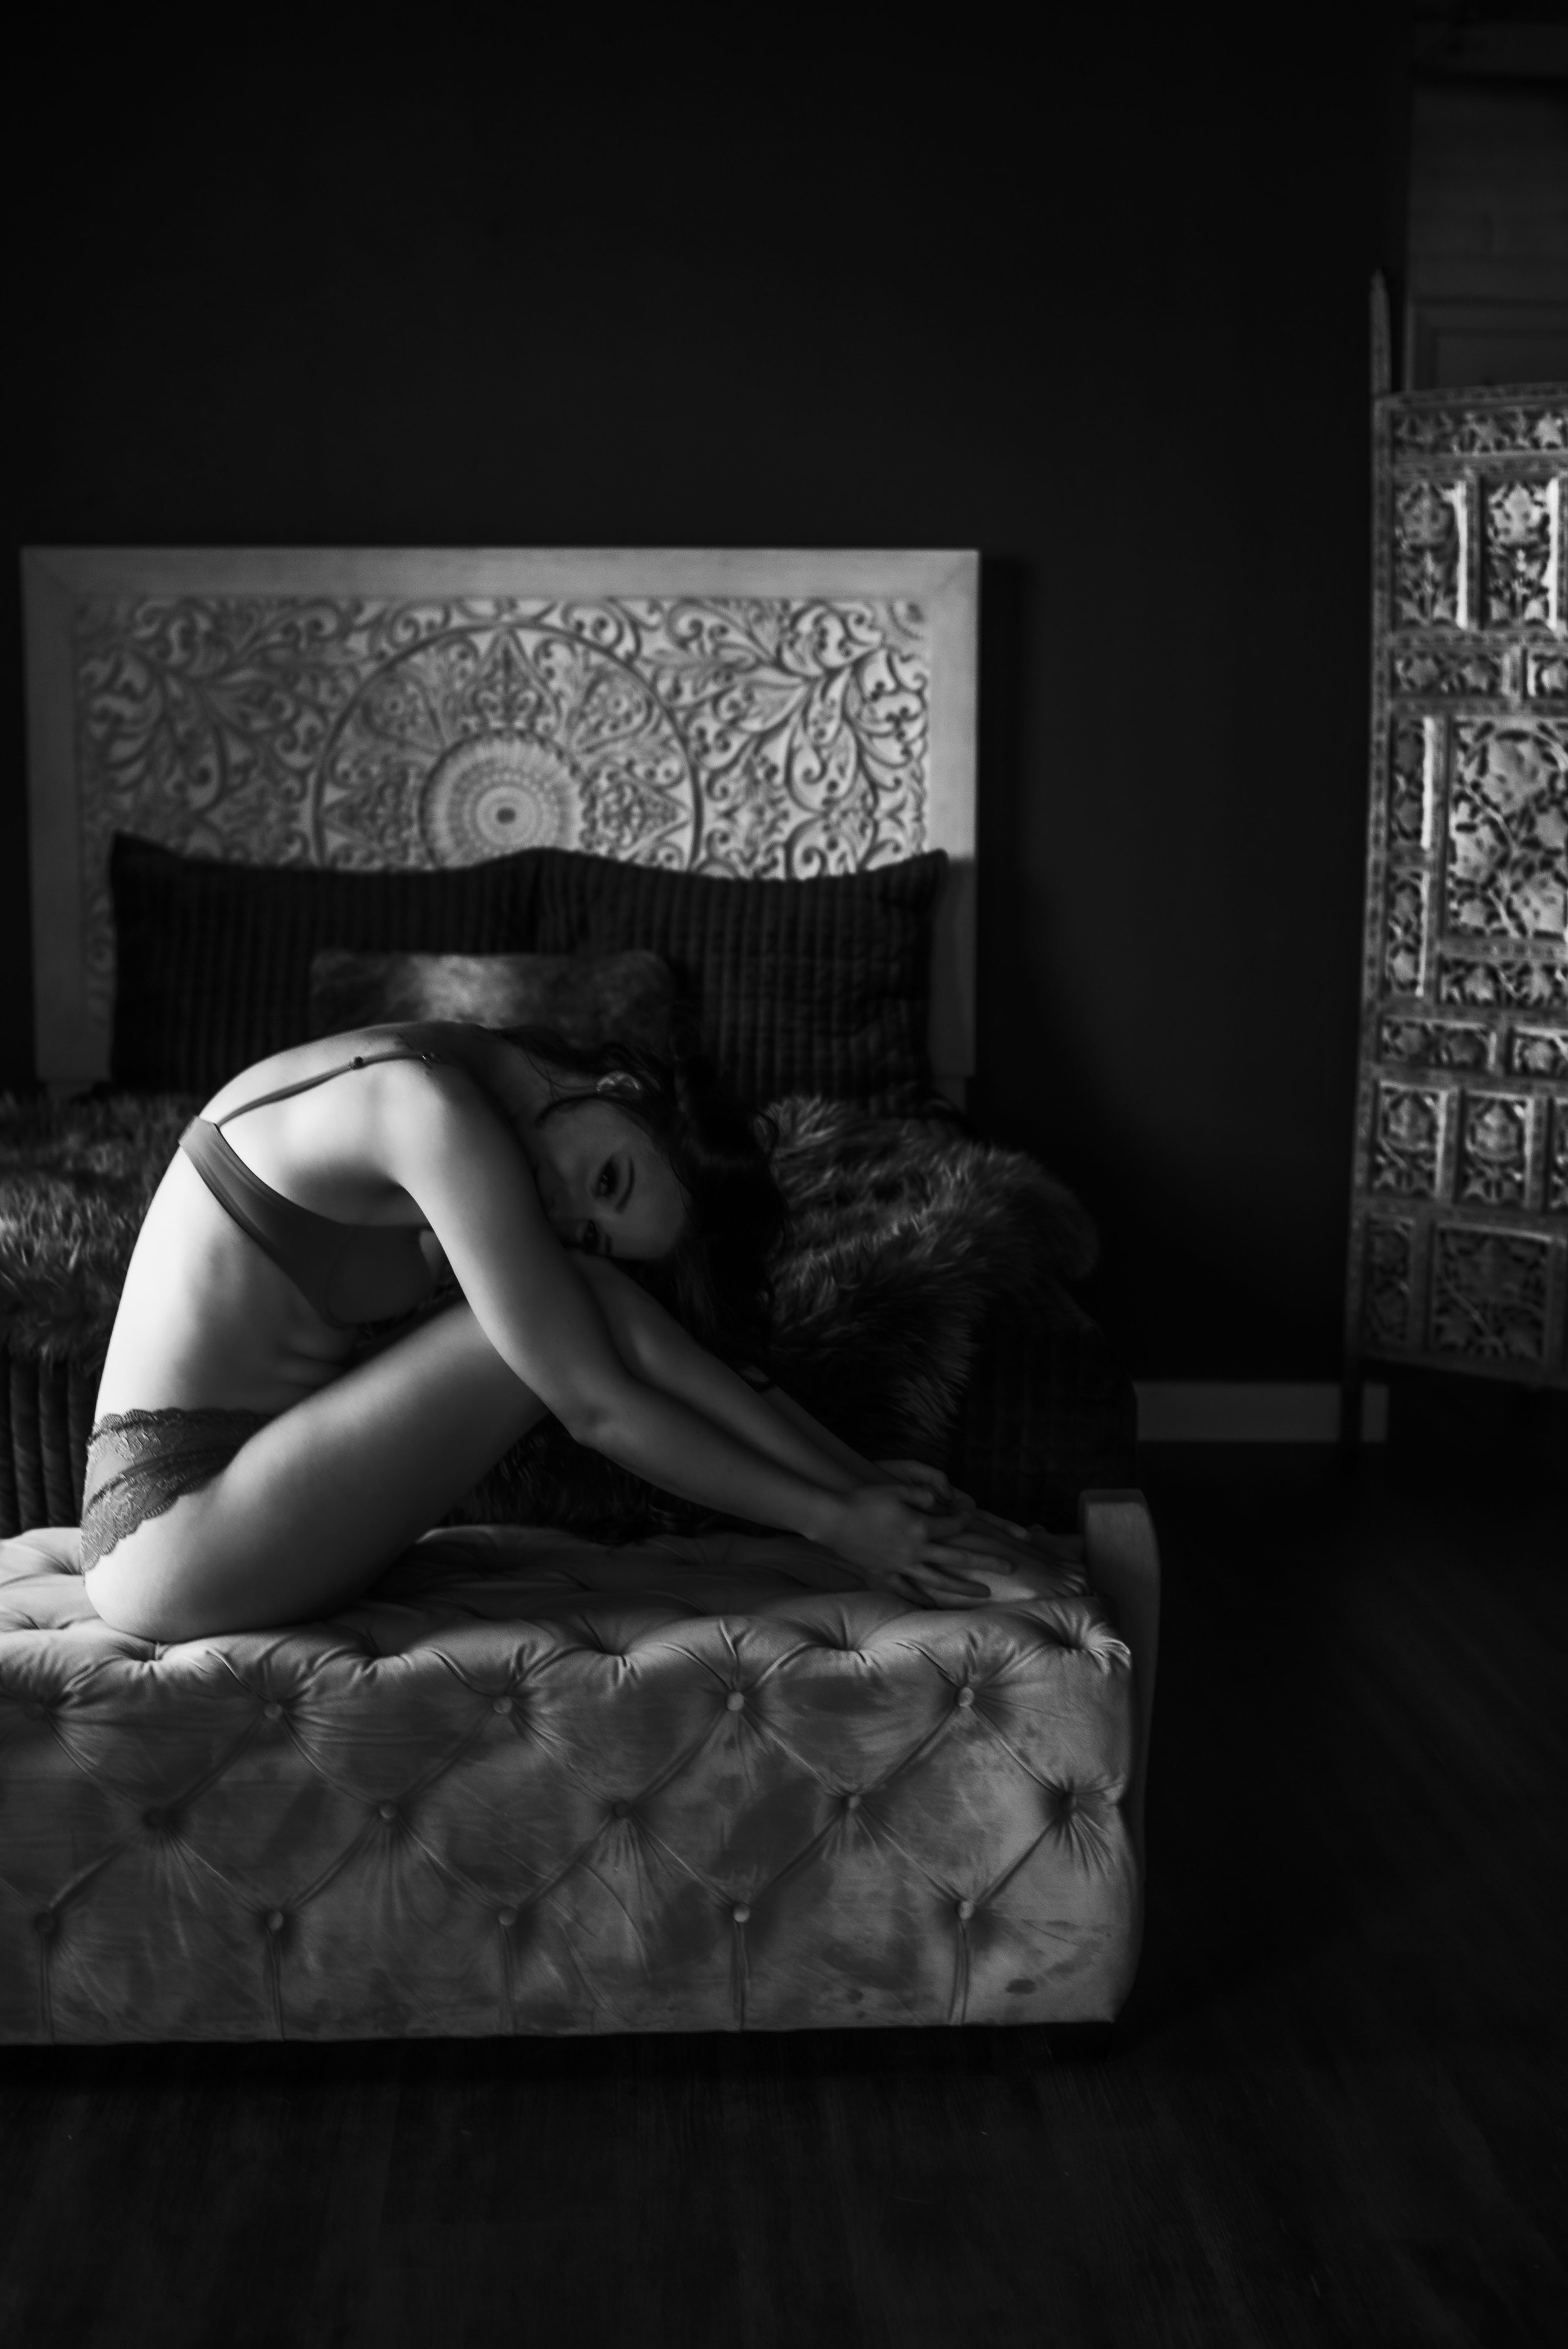 Moody boudoir photos in black and white